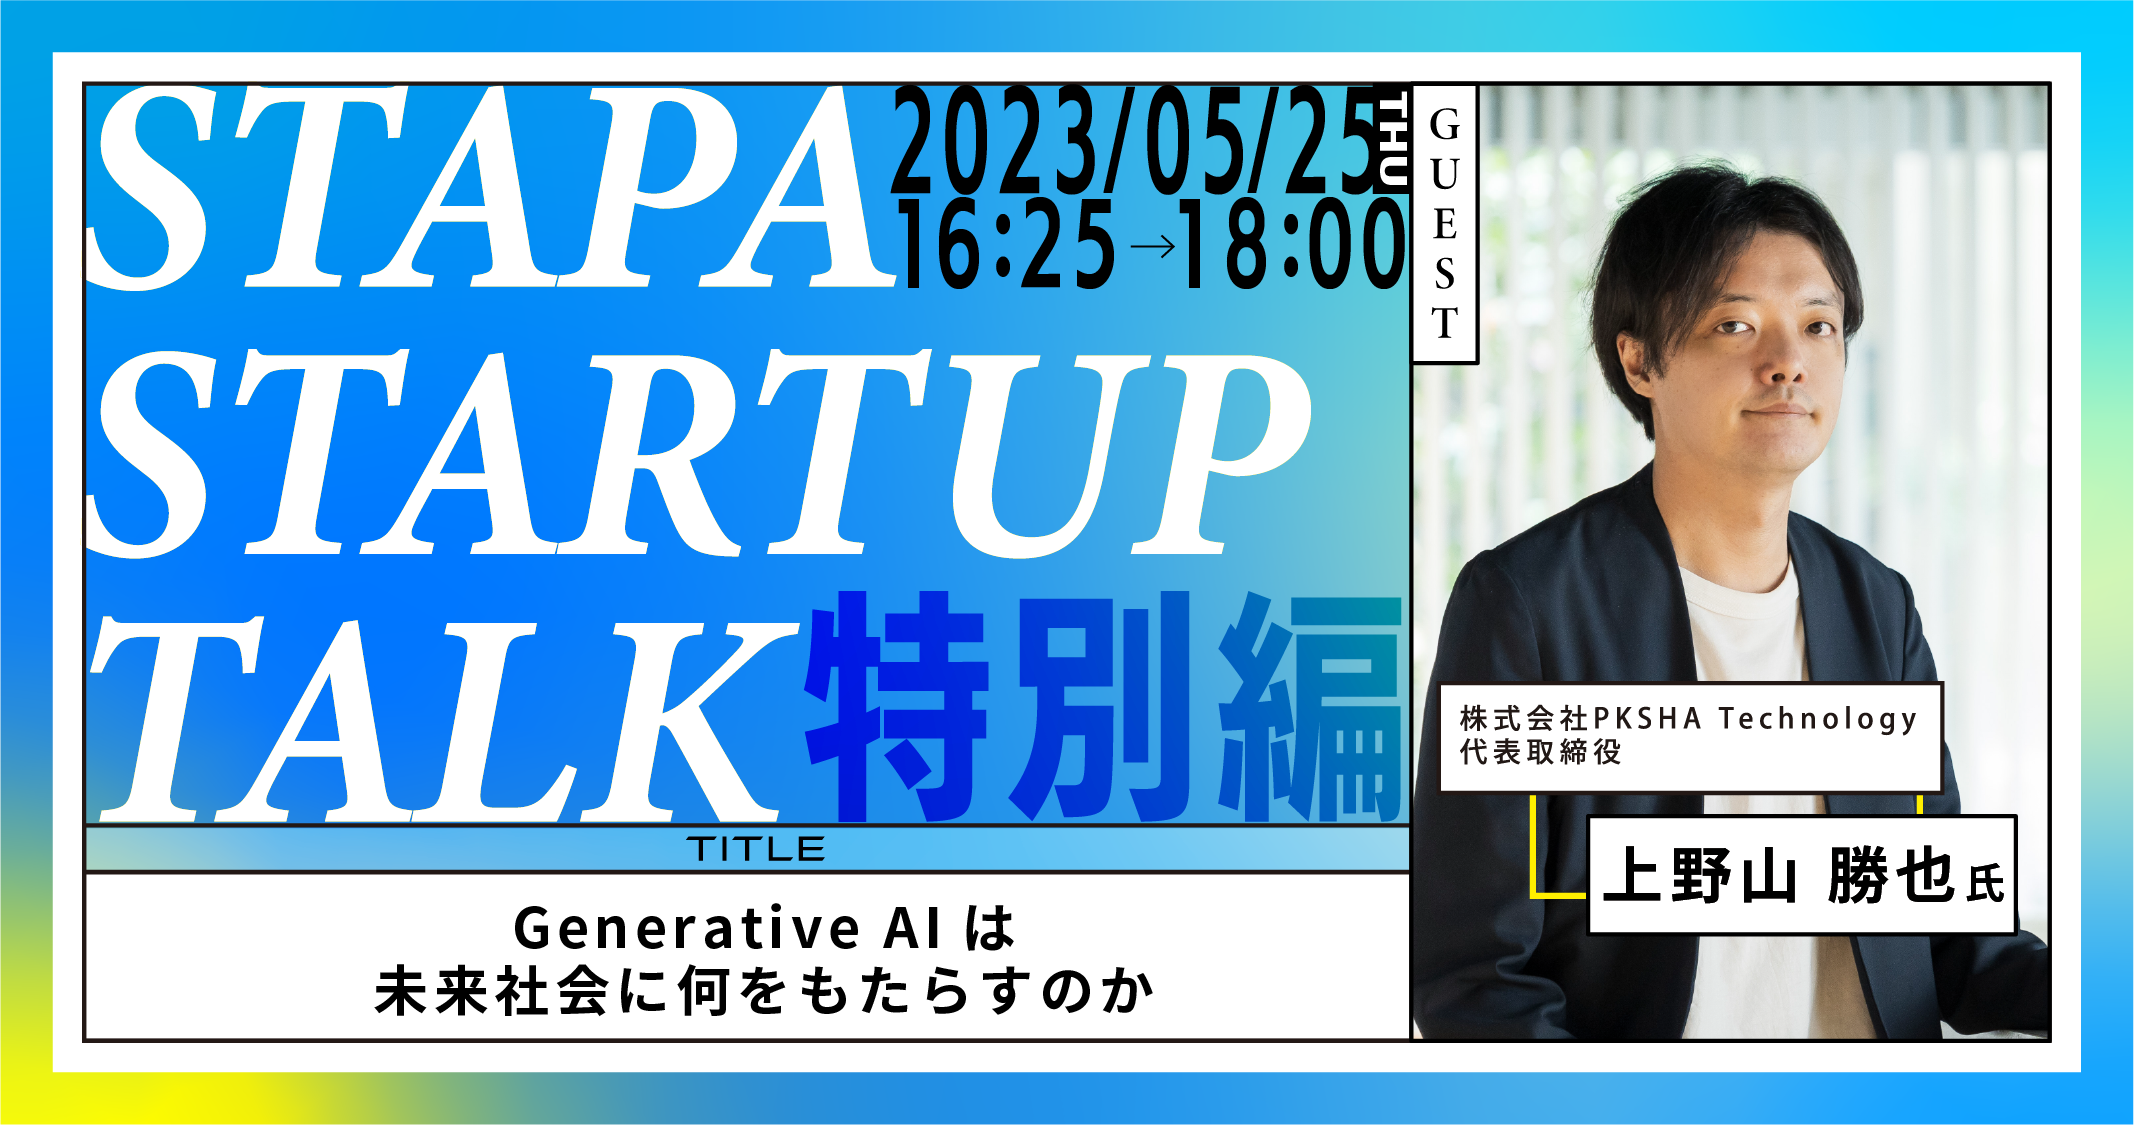 STAPA STARTUP TALK 特別編 －Generative AIは未来社会に何をもたらすのか－